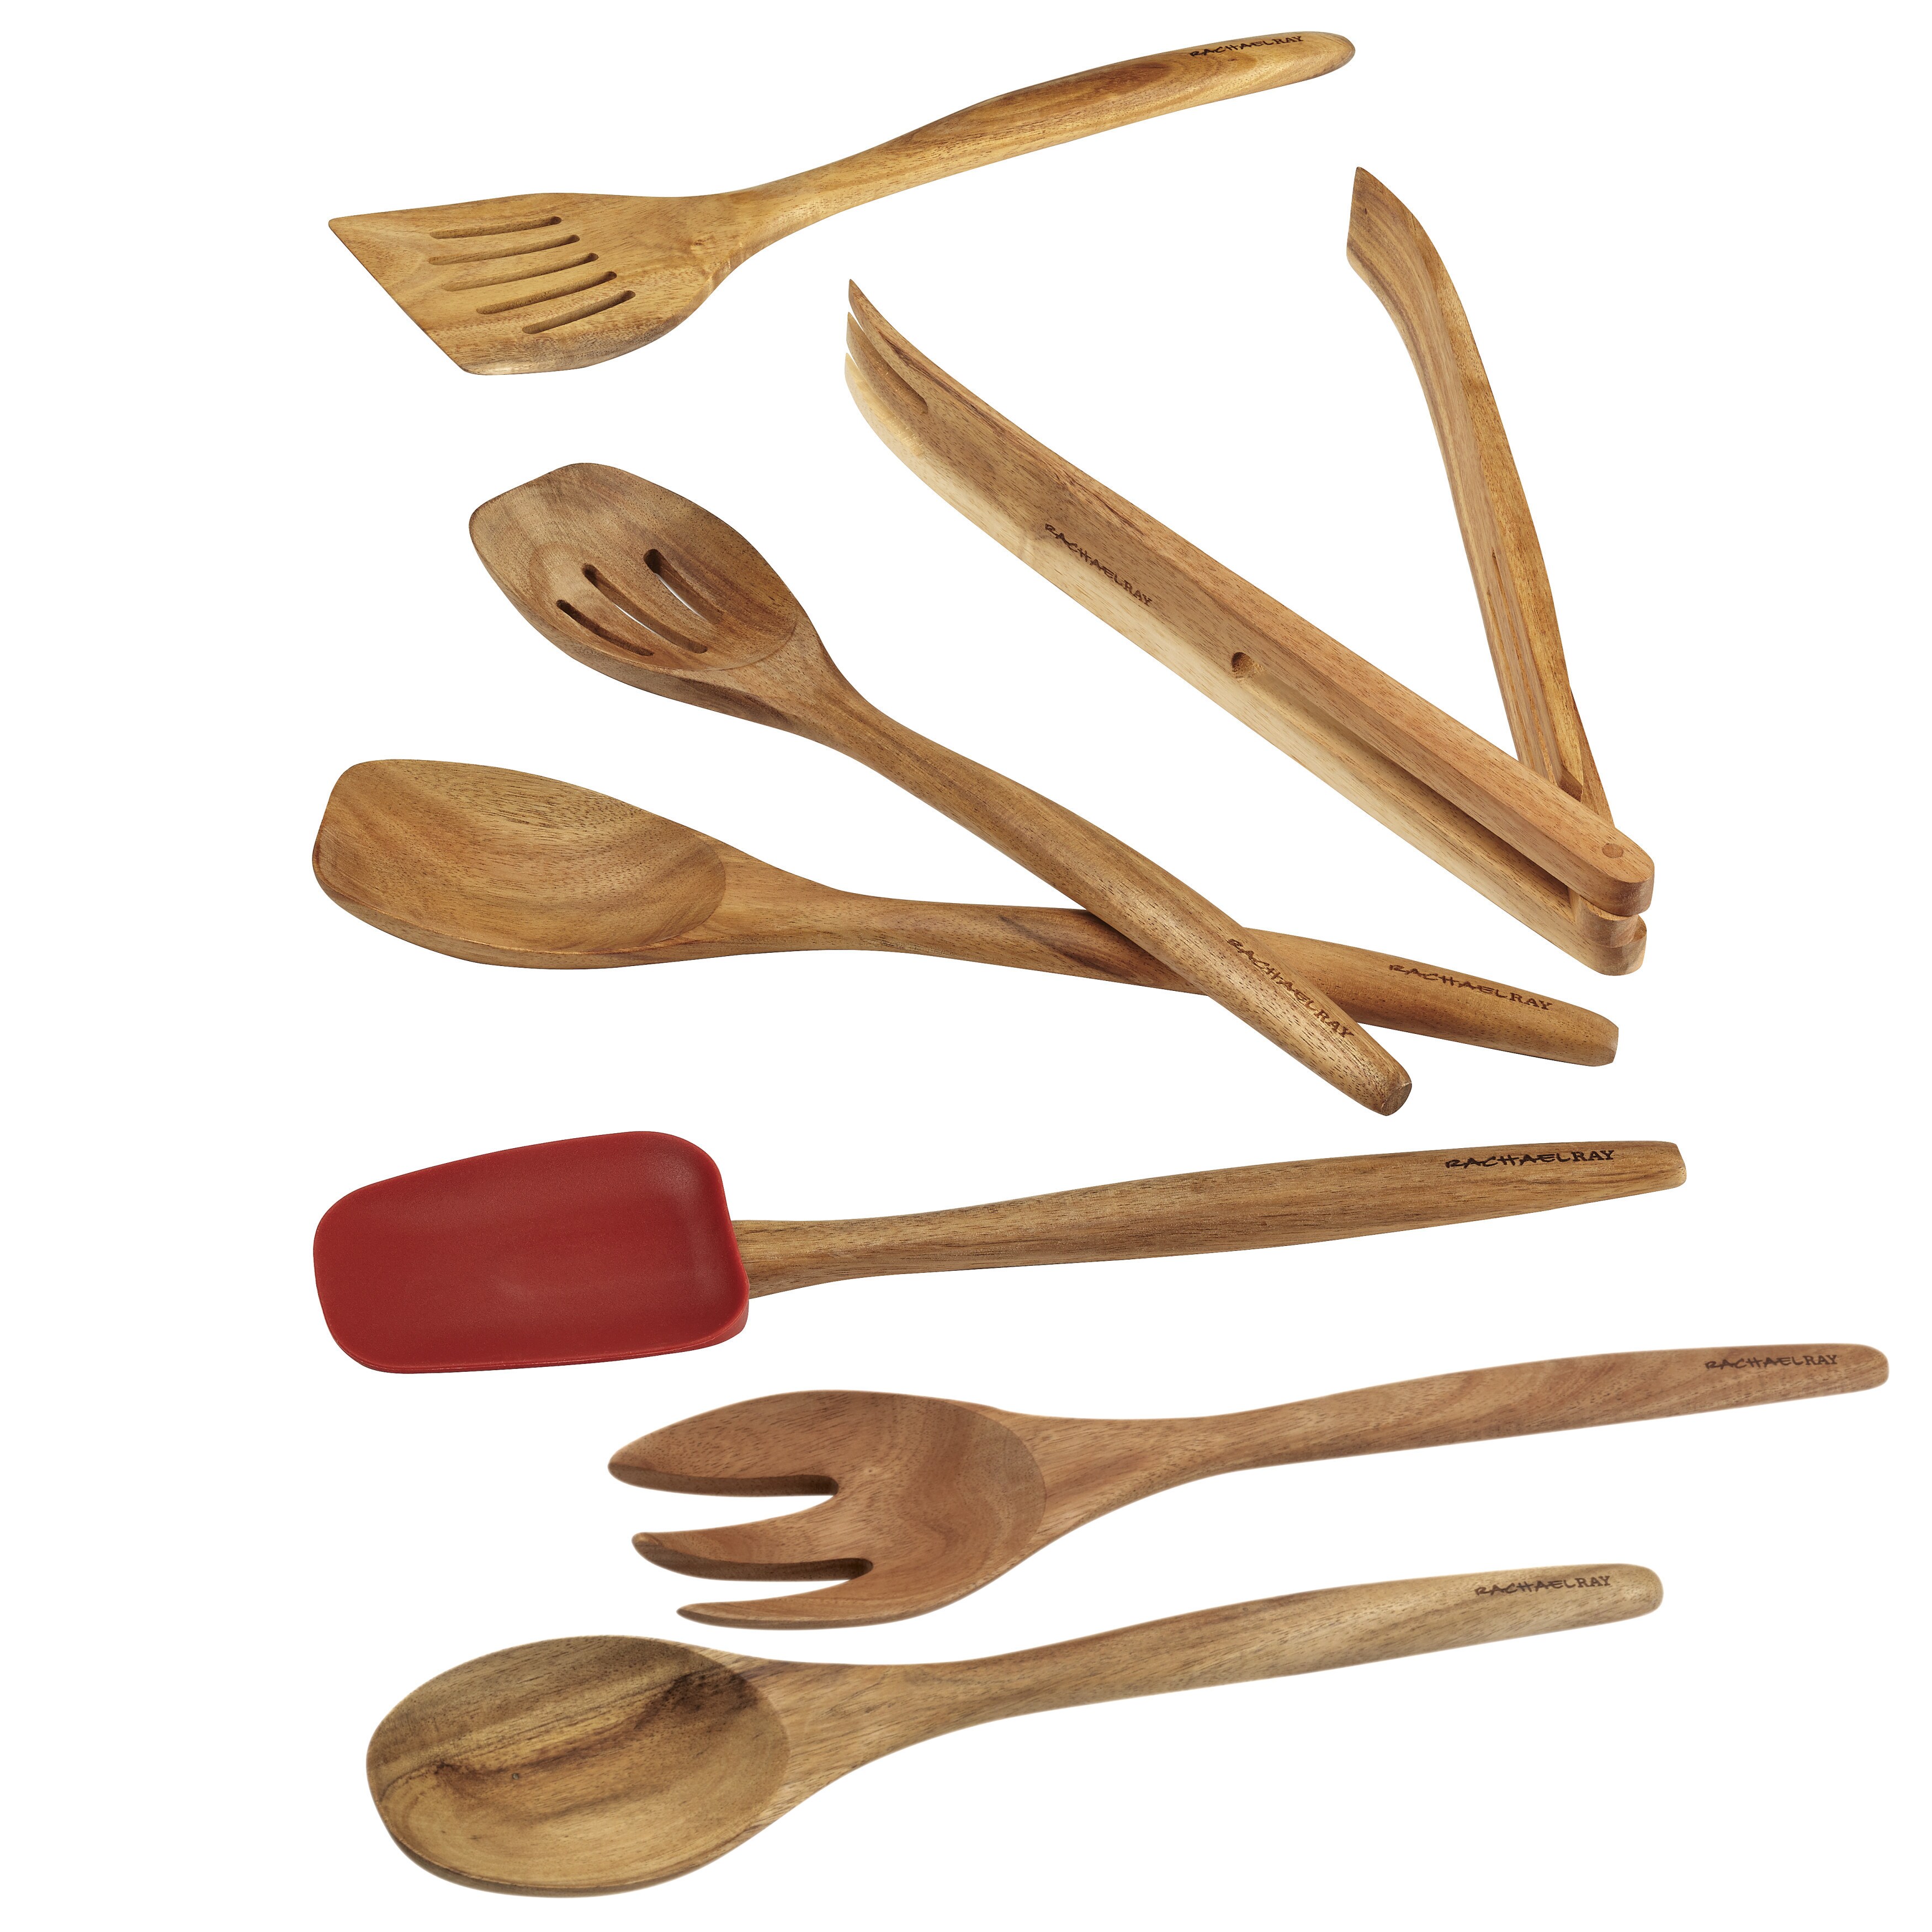 Rachael Ray Tools & Gadgets Wooden Kitchen Utensil Set, 4-Piece